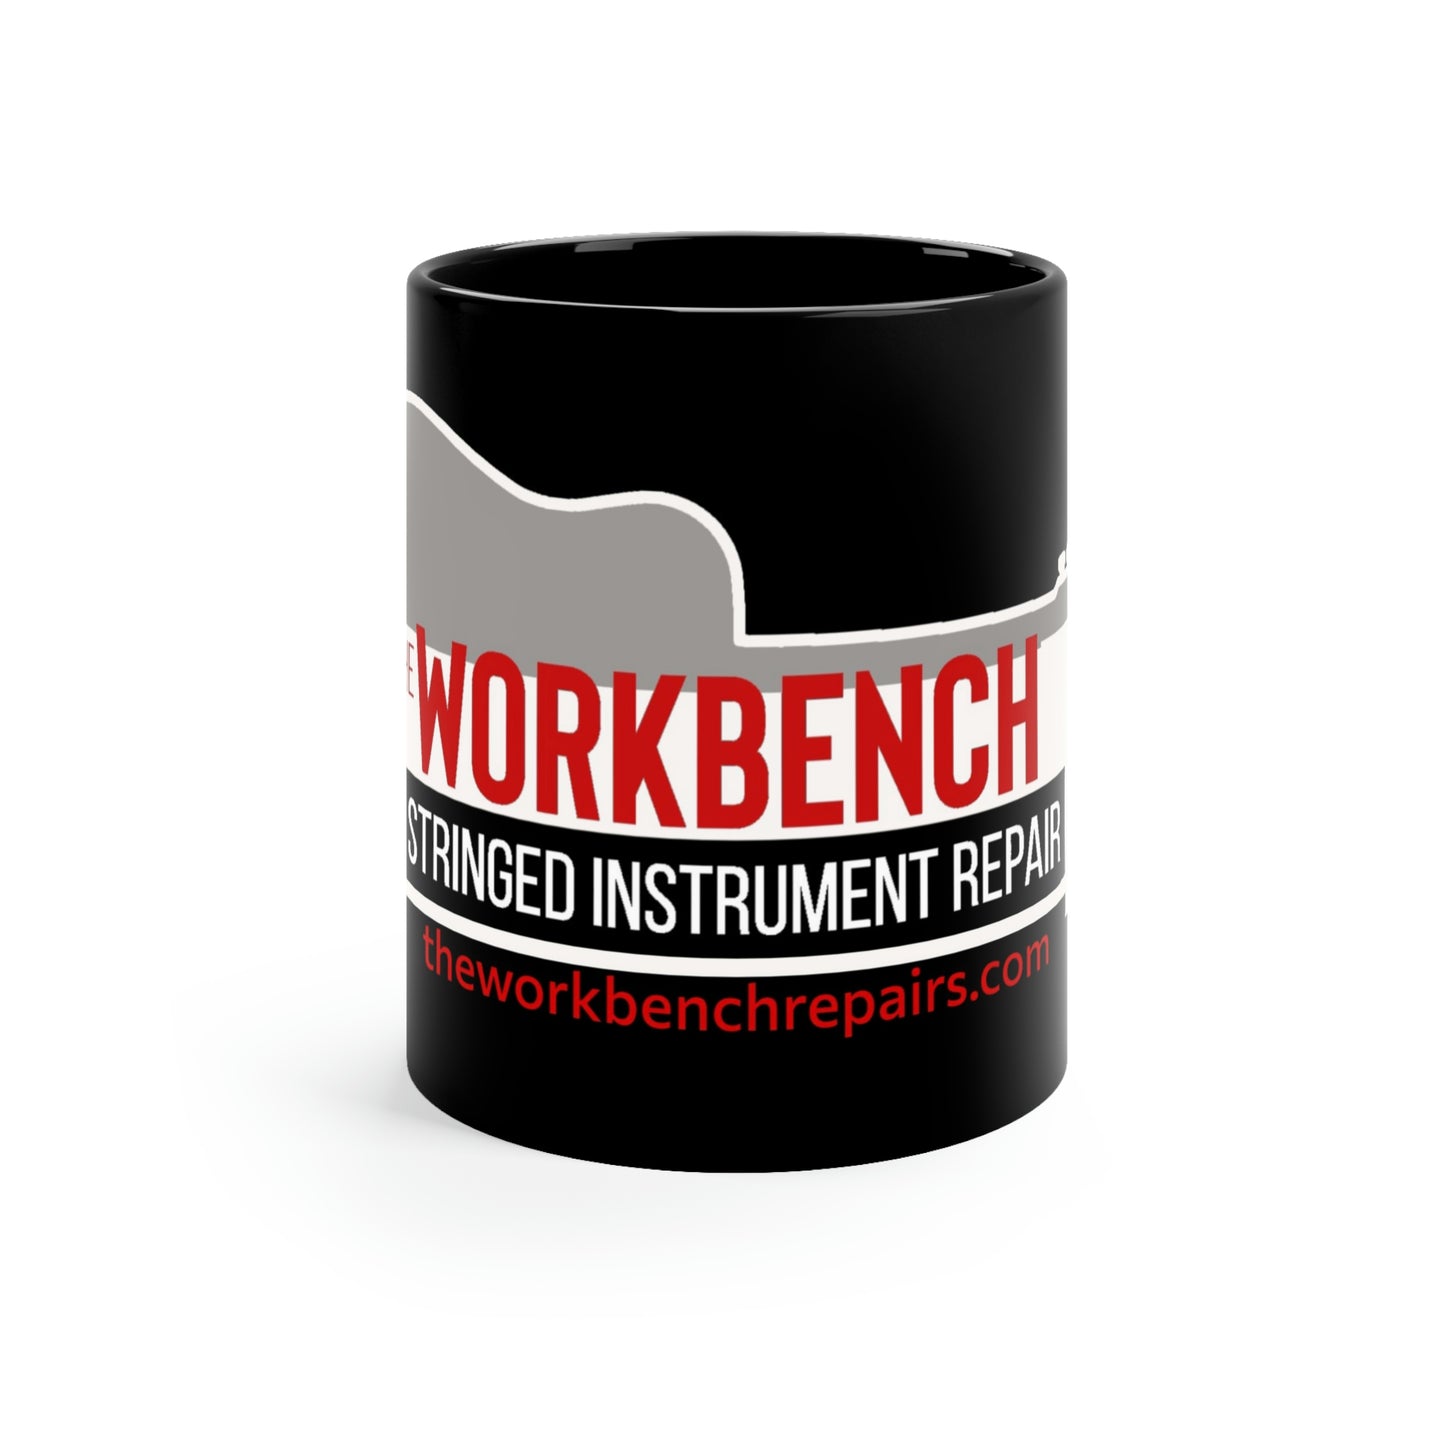 The Workbench 11oz Black Mug